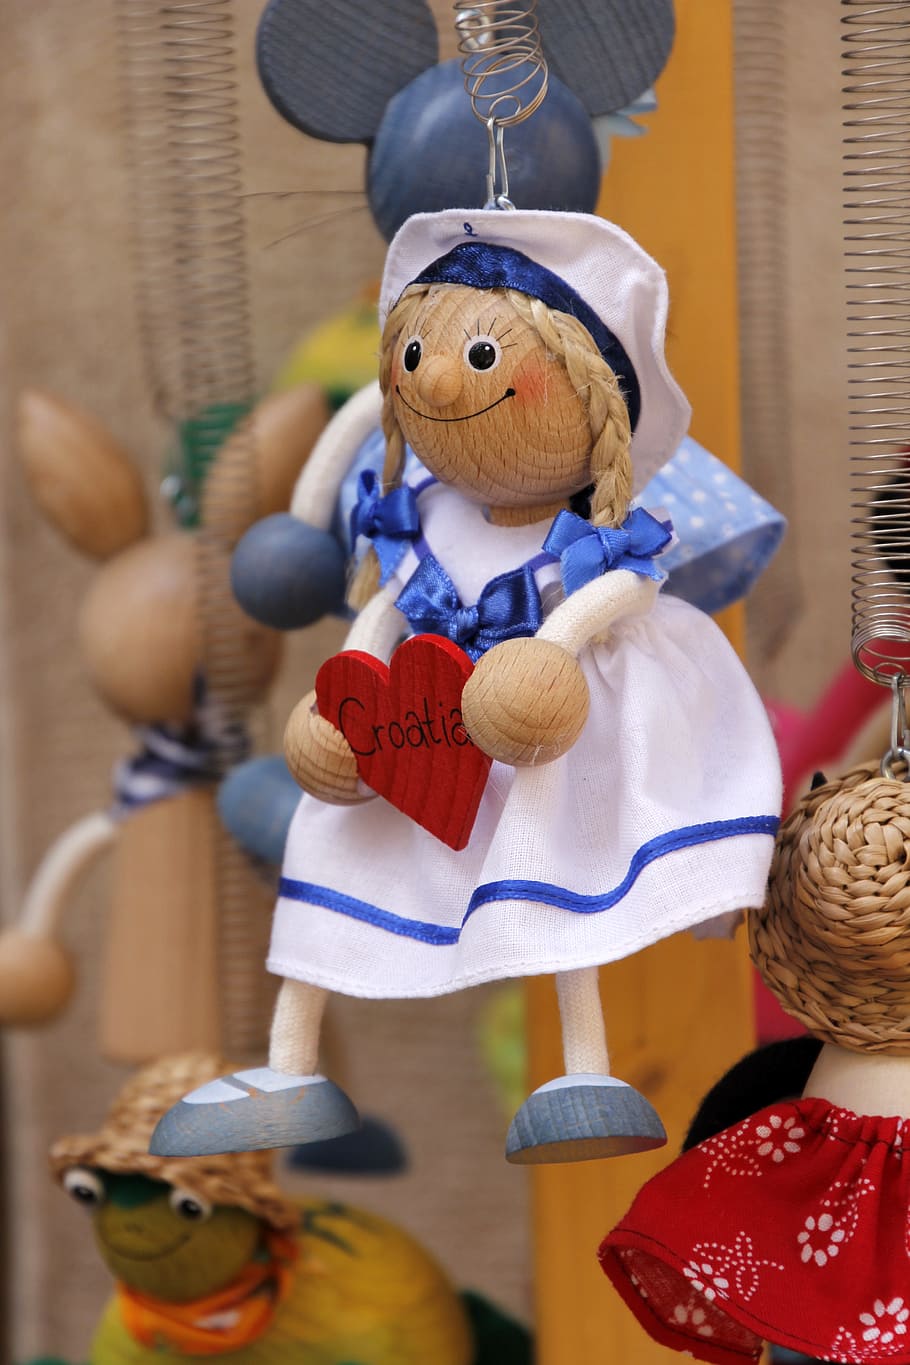 croatia, heart, souvenir, mitbringsel, depend, decoration, memory, representation, toy, art and craft